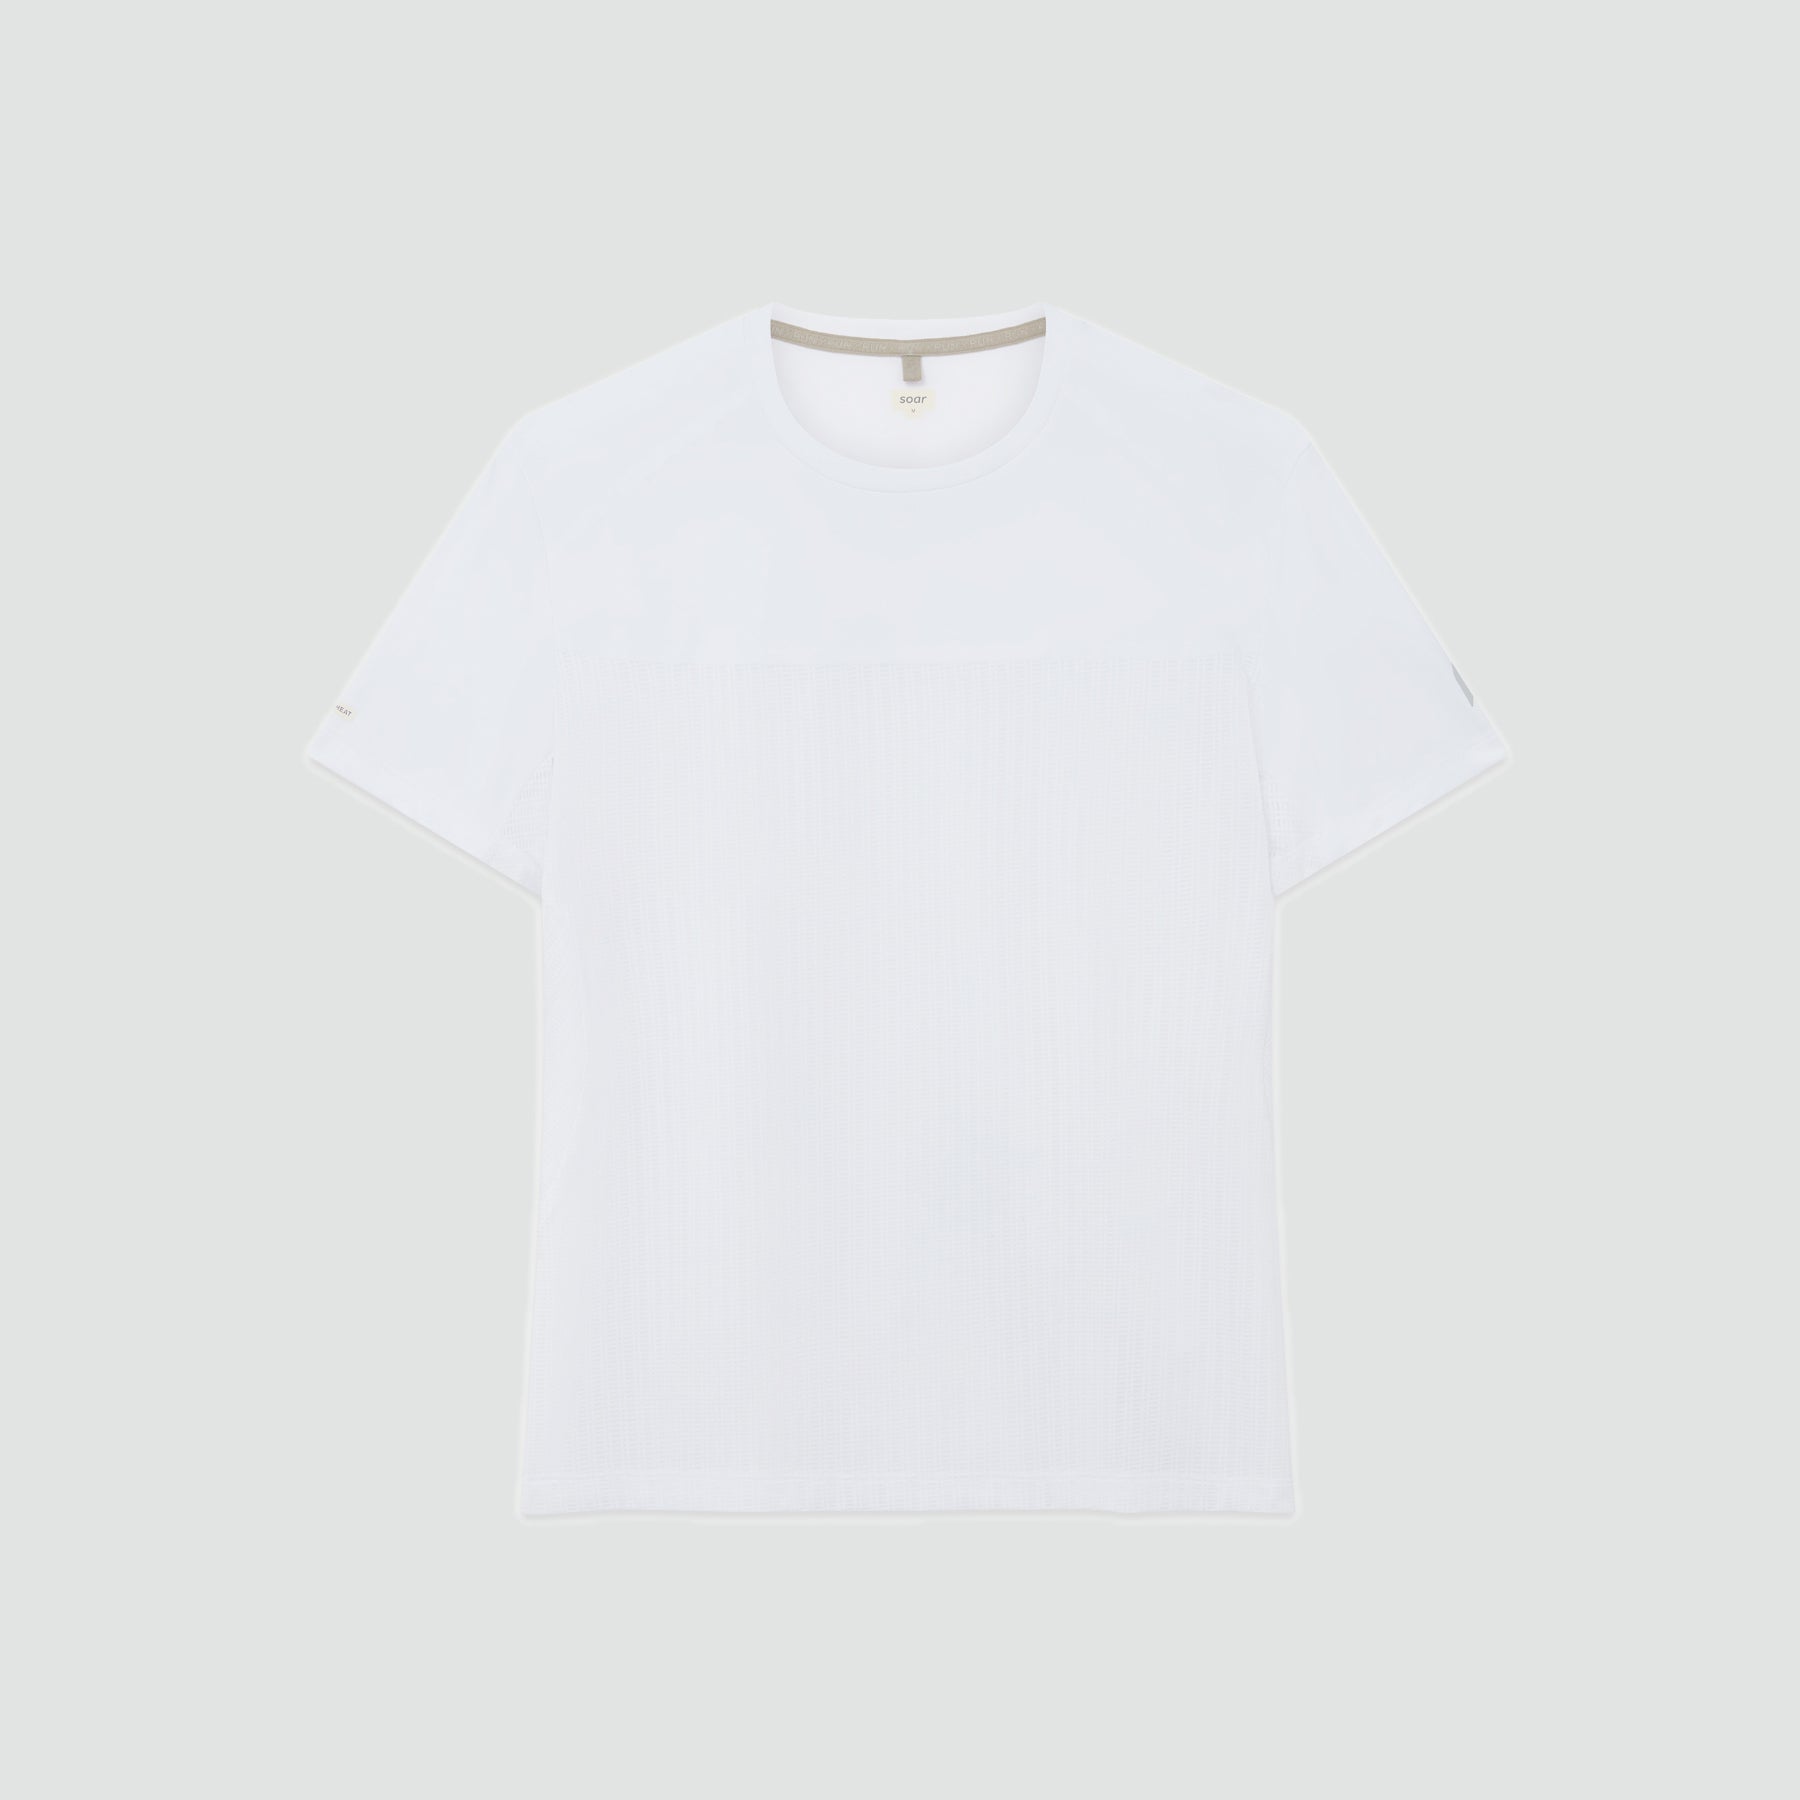 T-shirt Hot Weather femme - blanc